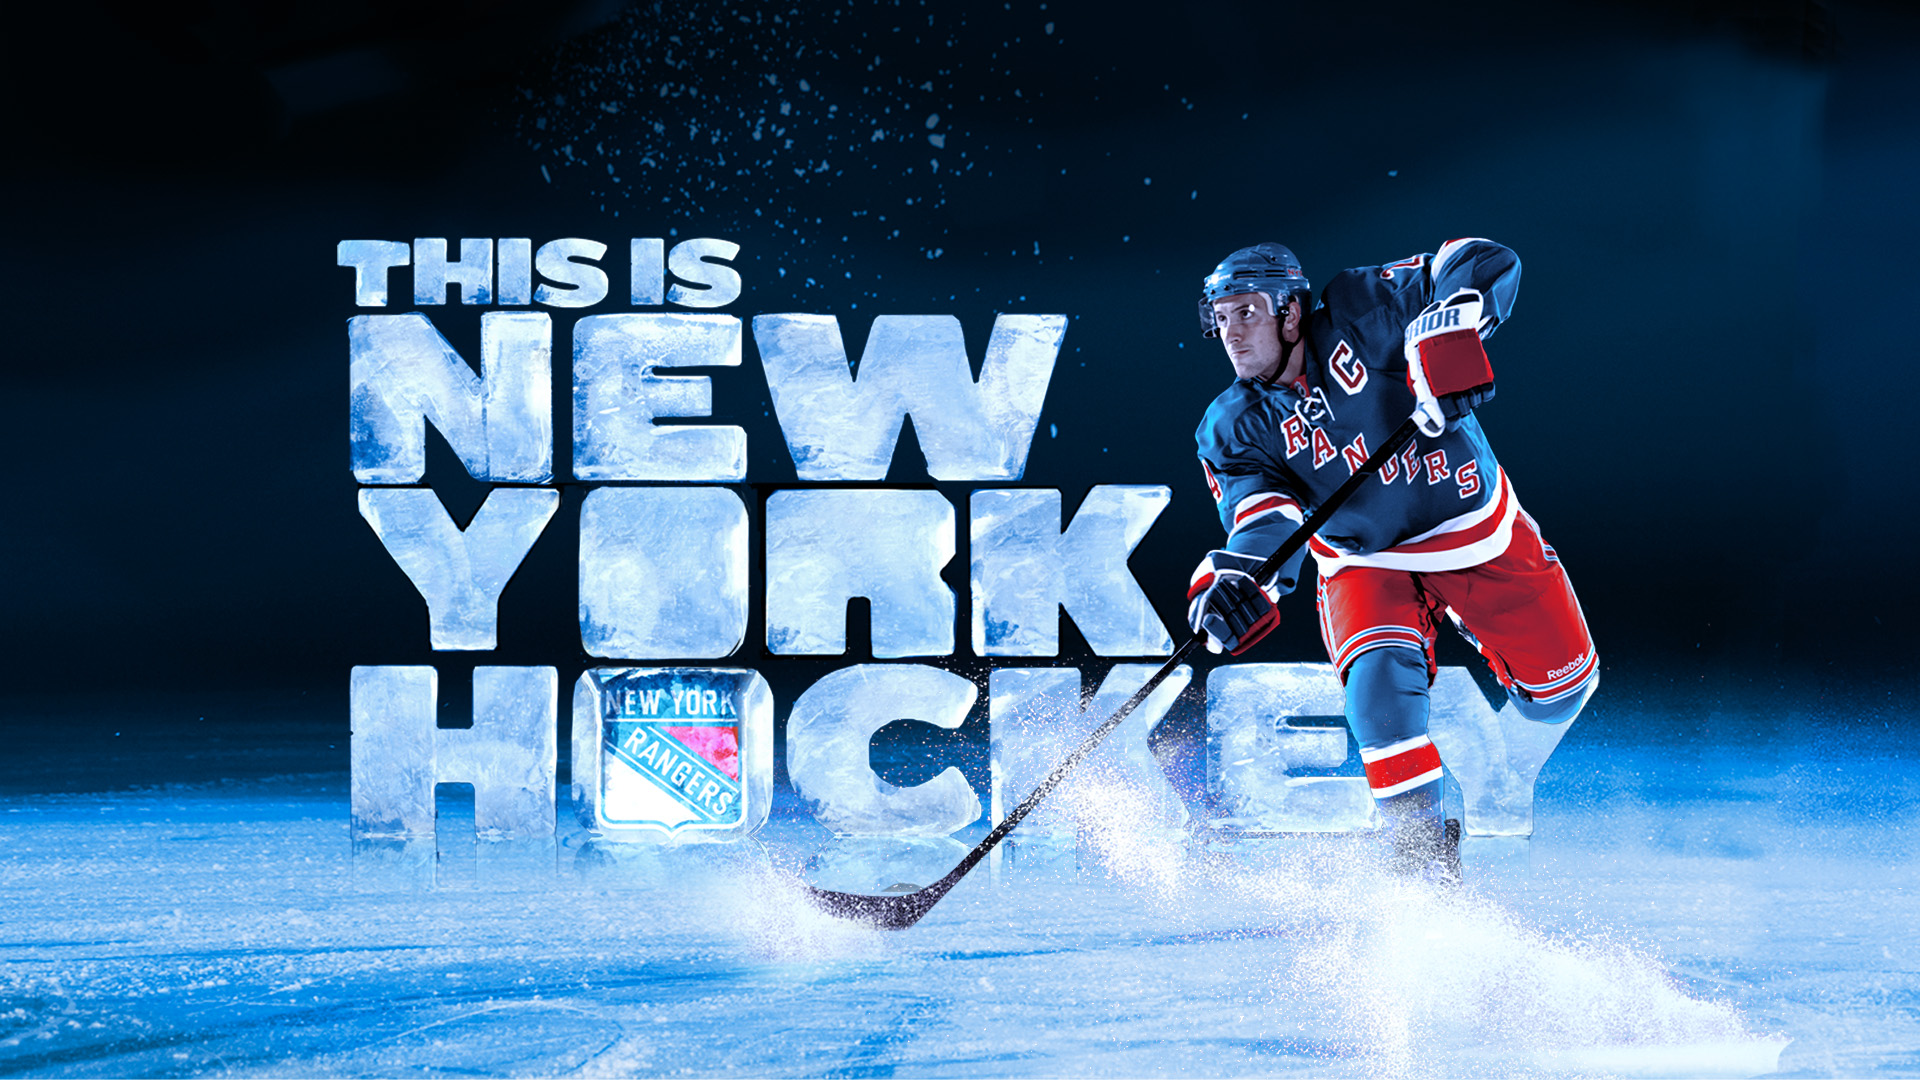 ew york rangers, hockey, ice hockey Wallpaper, HD Sports 4K Wallpapers